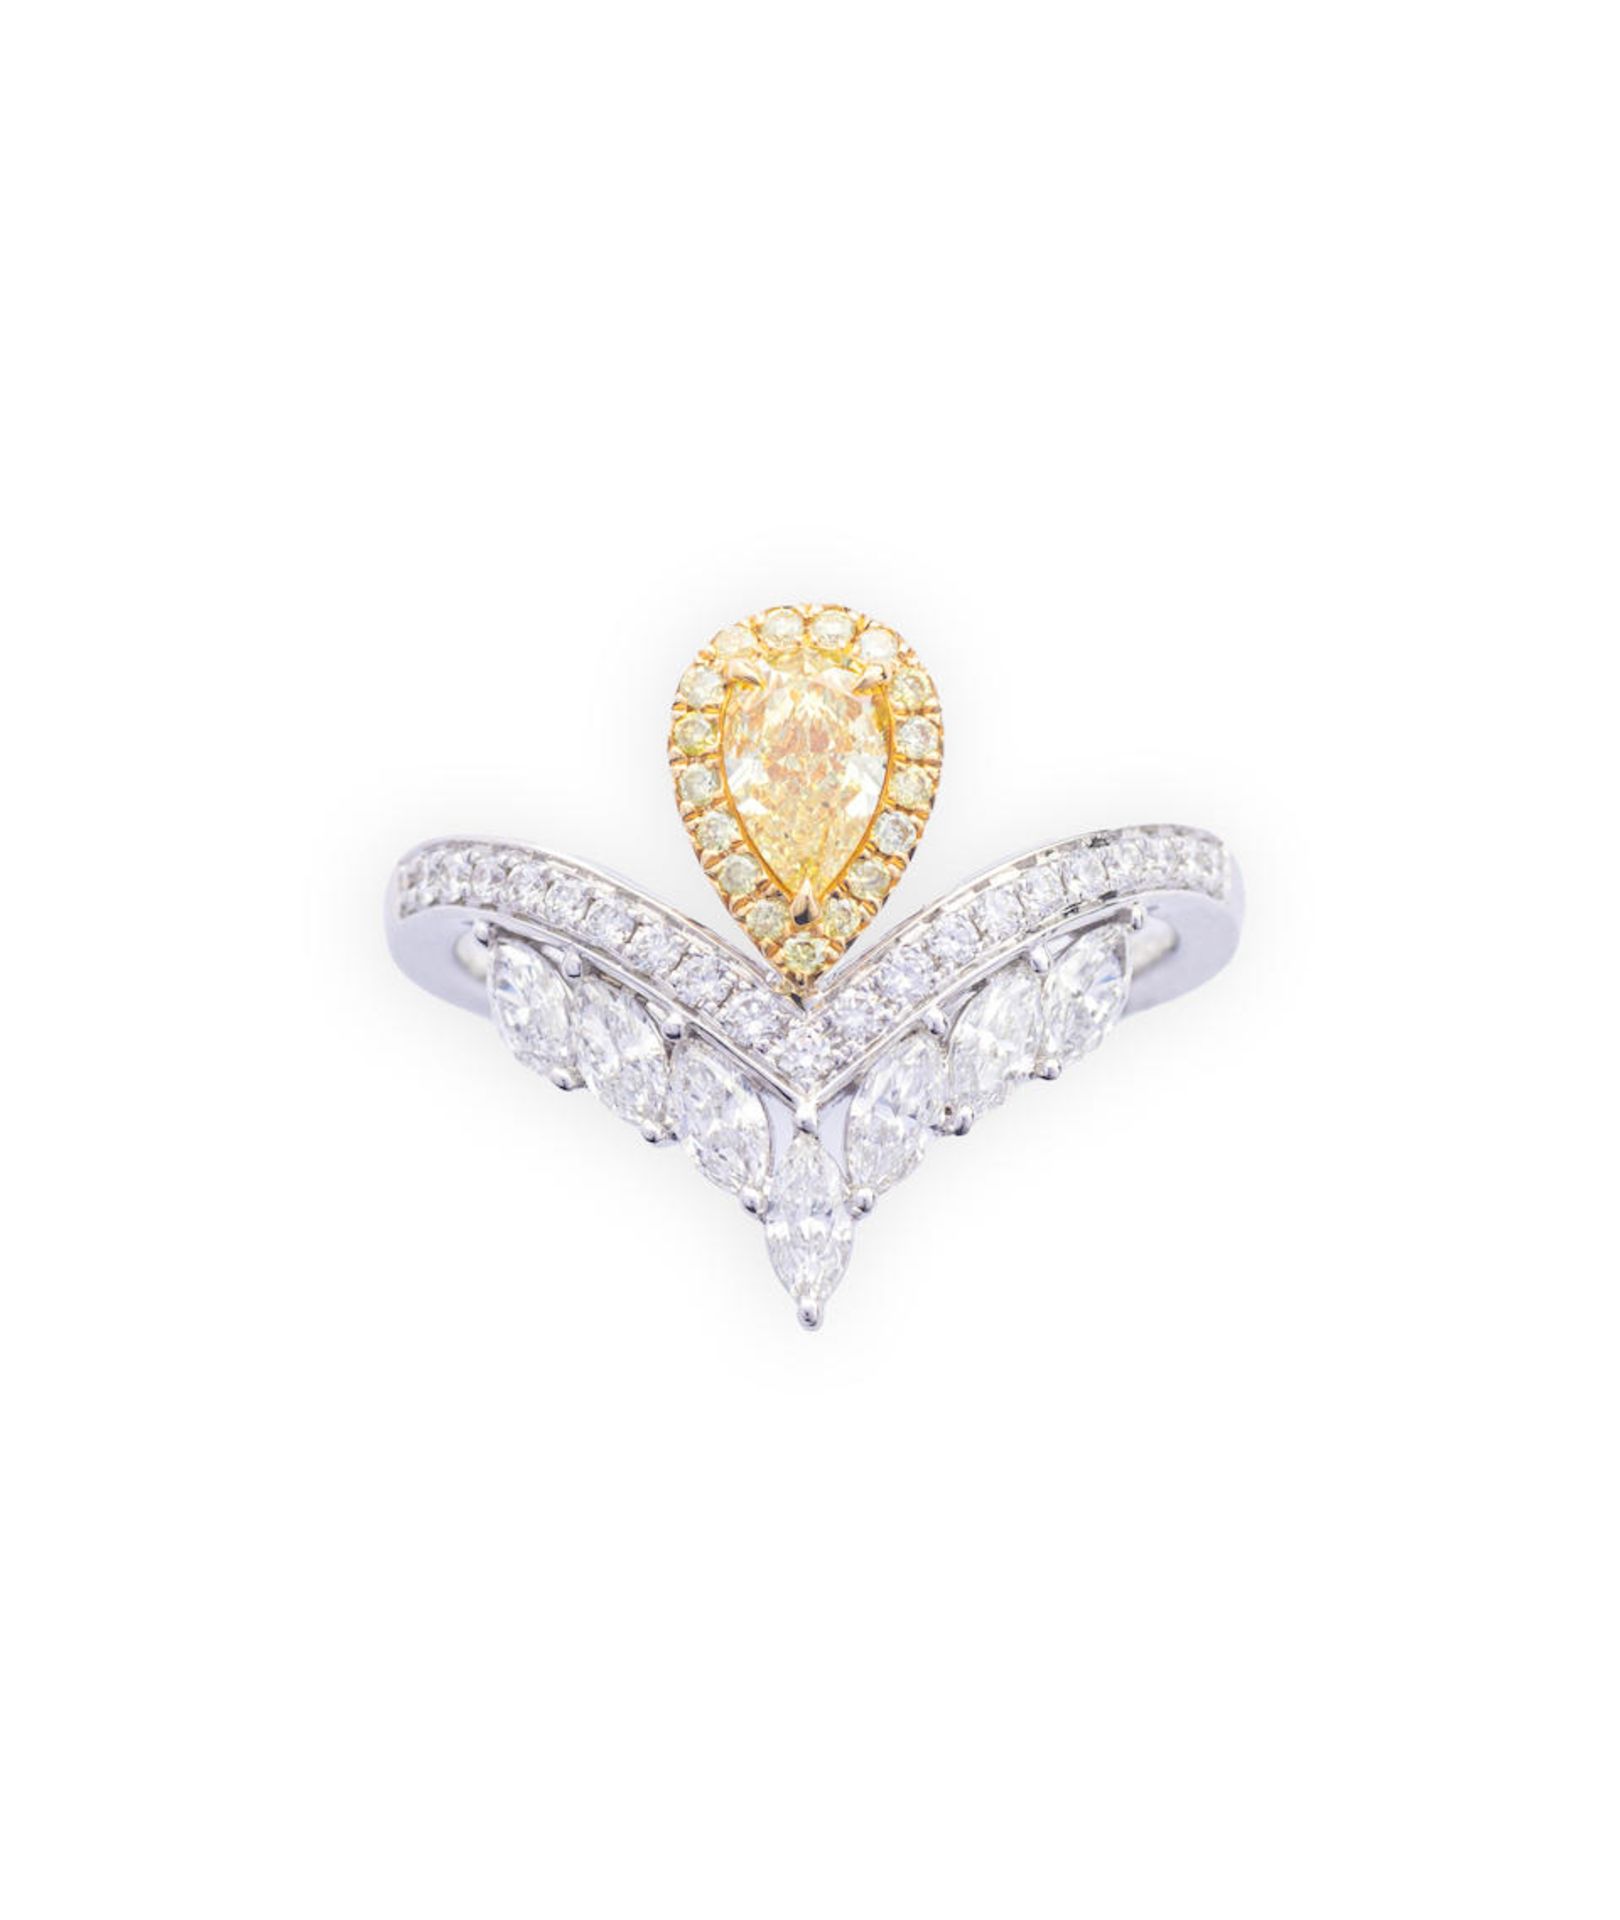 FANCY INTENSE YELLOW DIAMOND, COLOURED DIAMOND AND DIAMOND RING